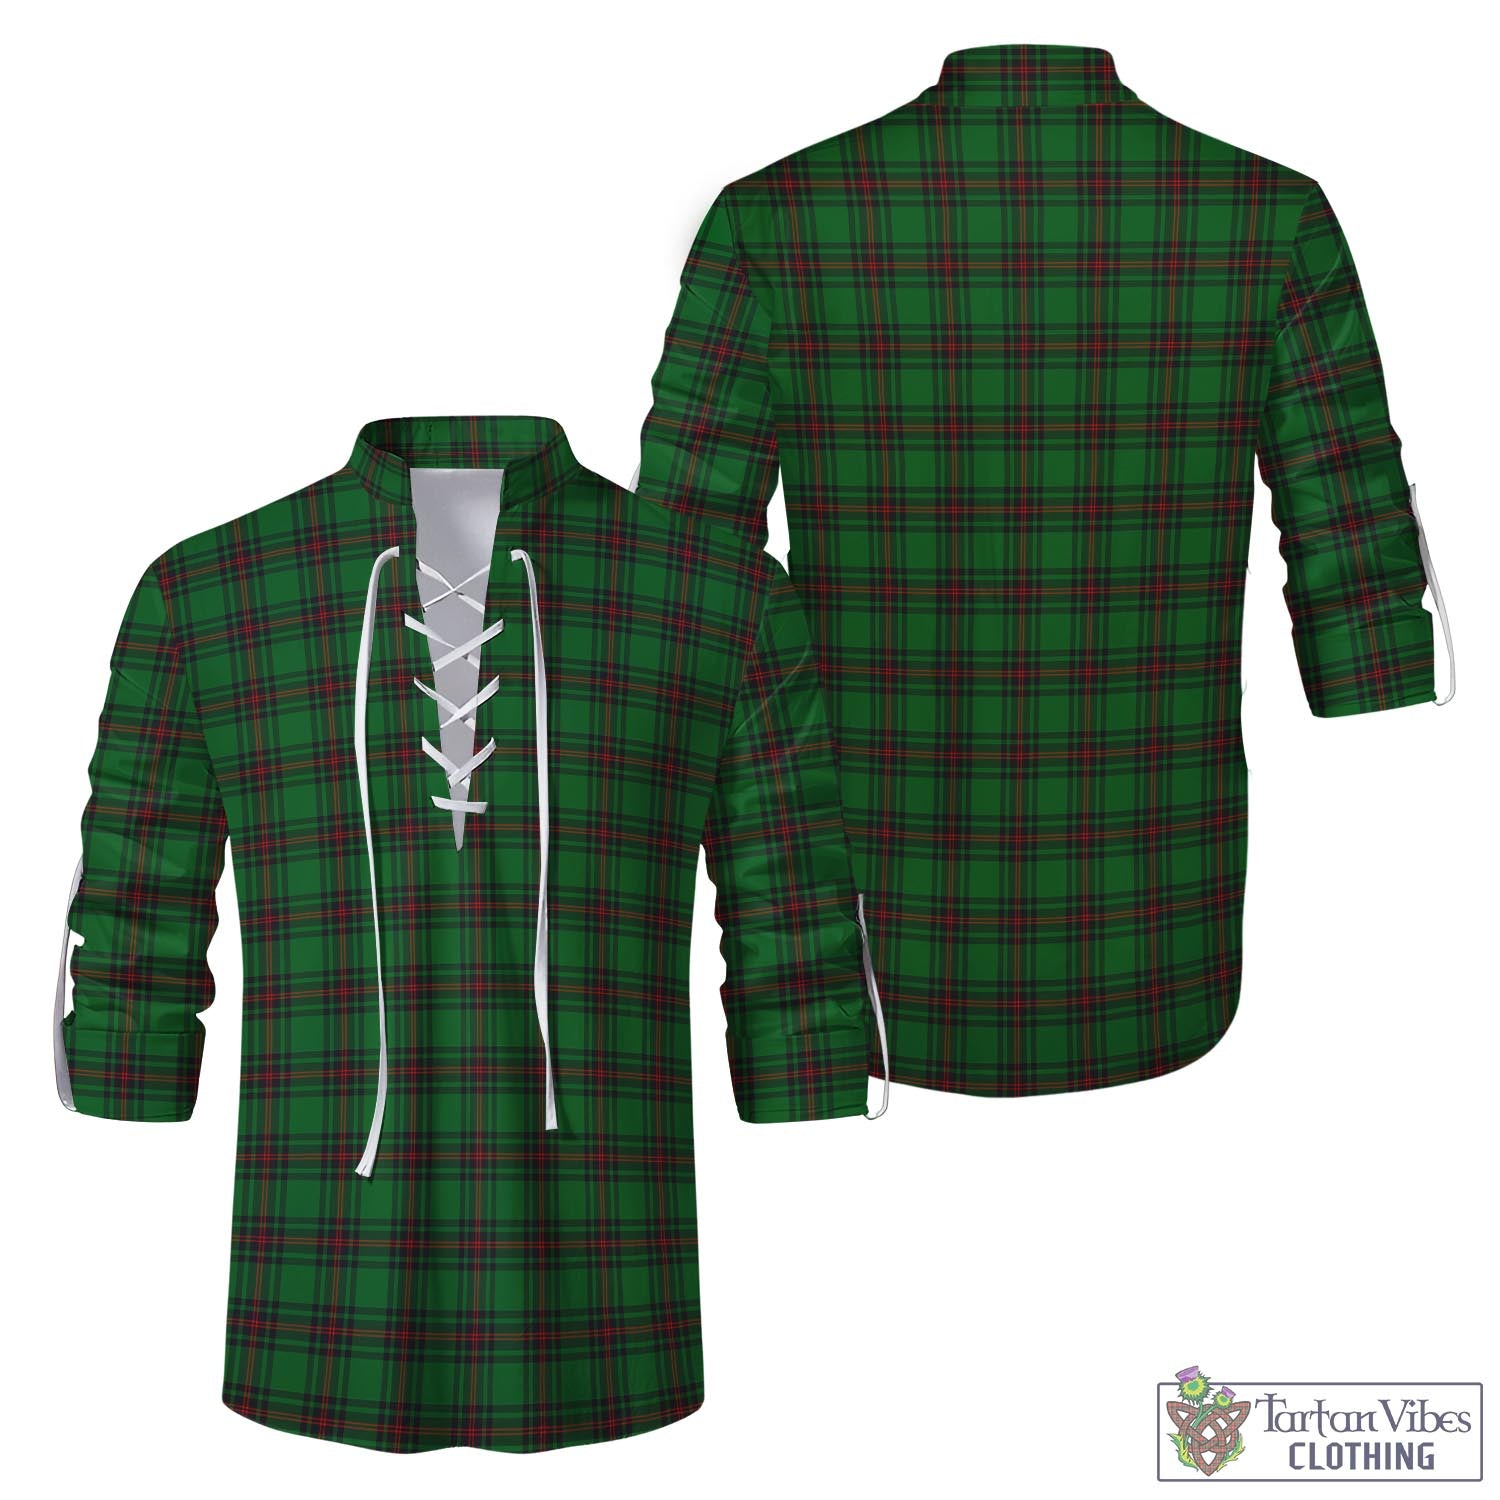 Tartan Vibes Clothing Halkett Tartan Men's Scottish Traditional Jacobite Ghillie Kilt Shirt